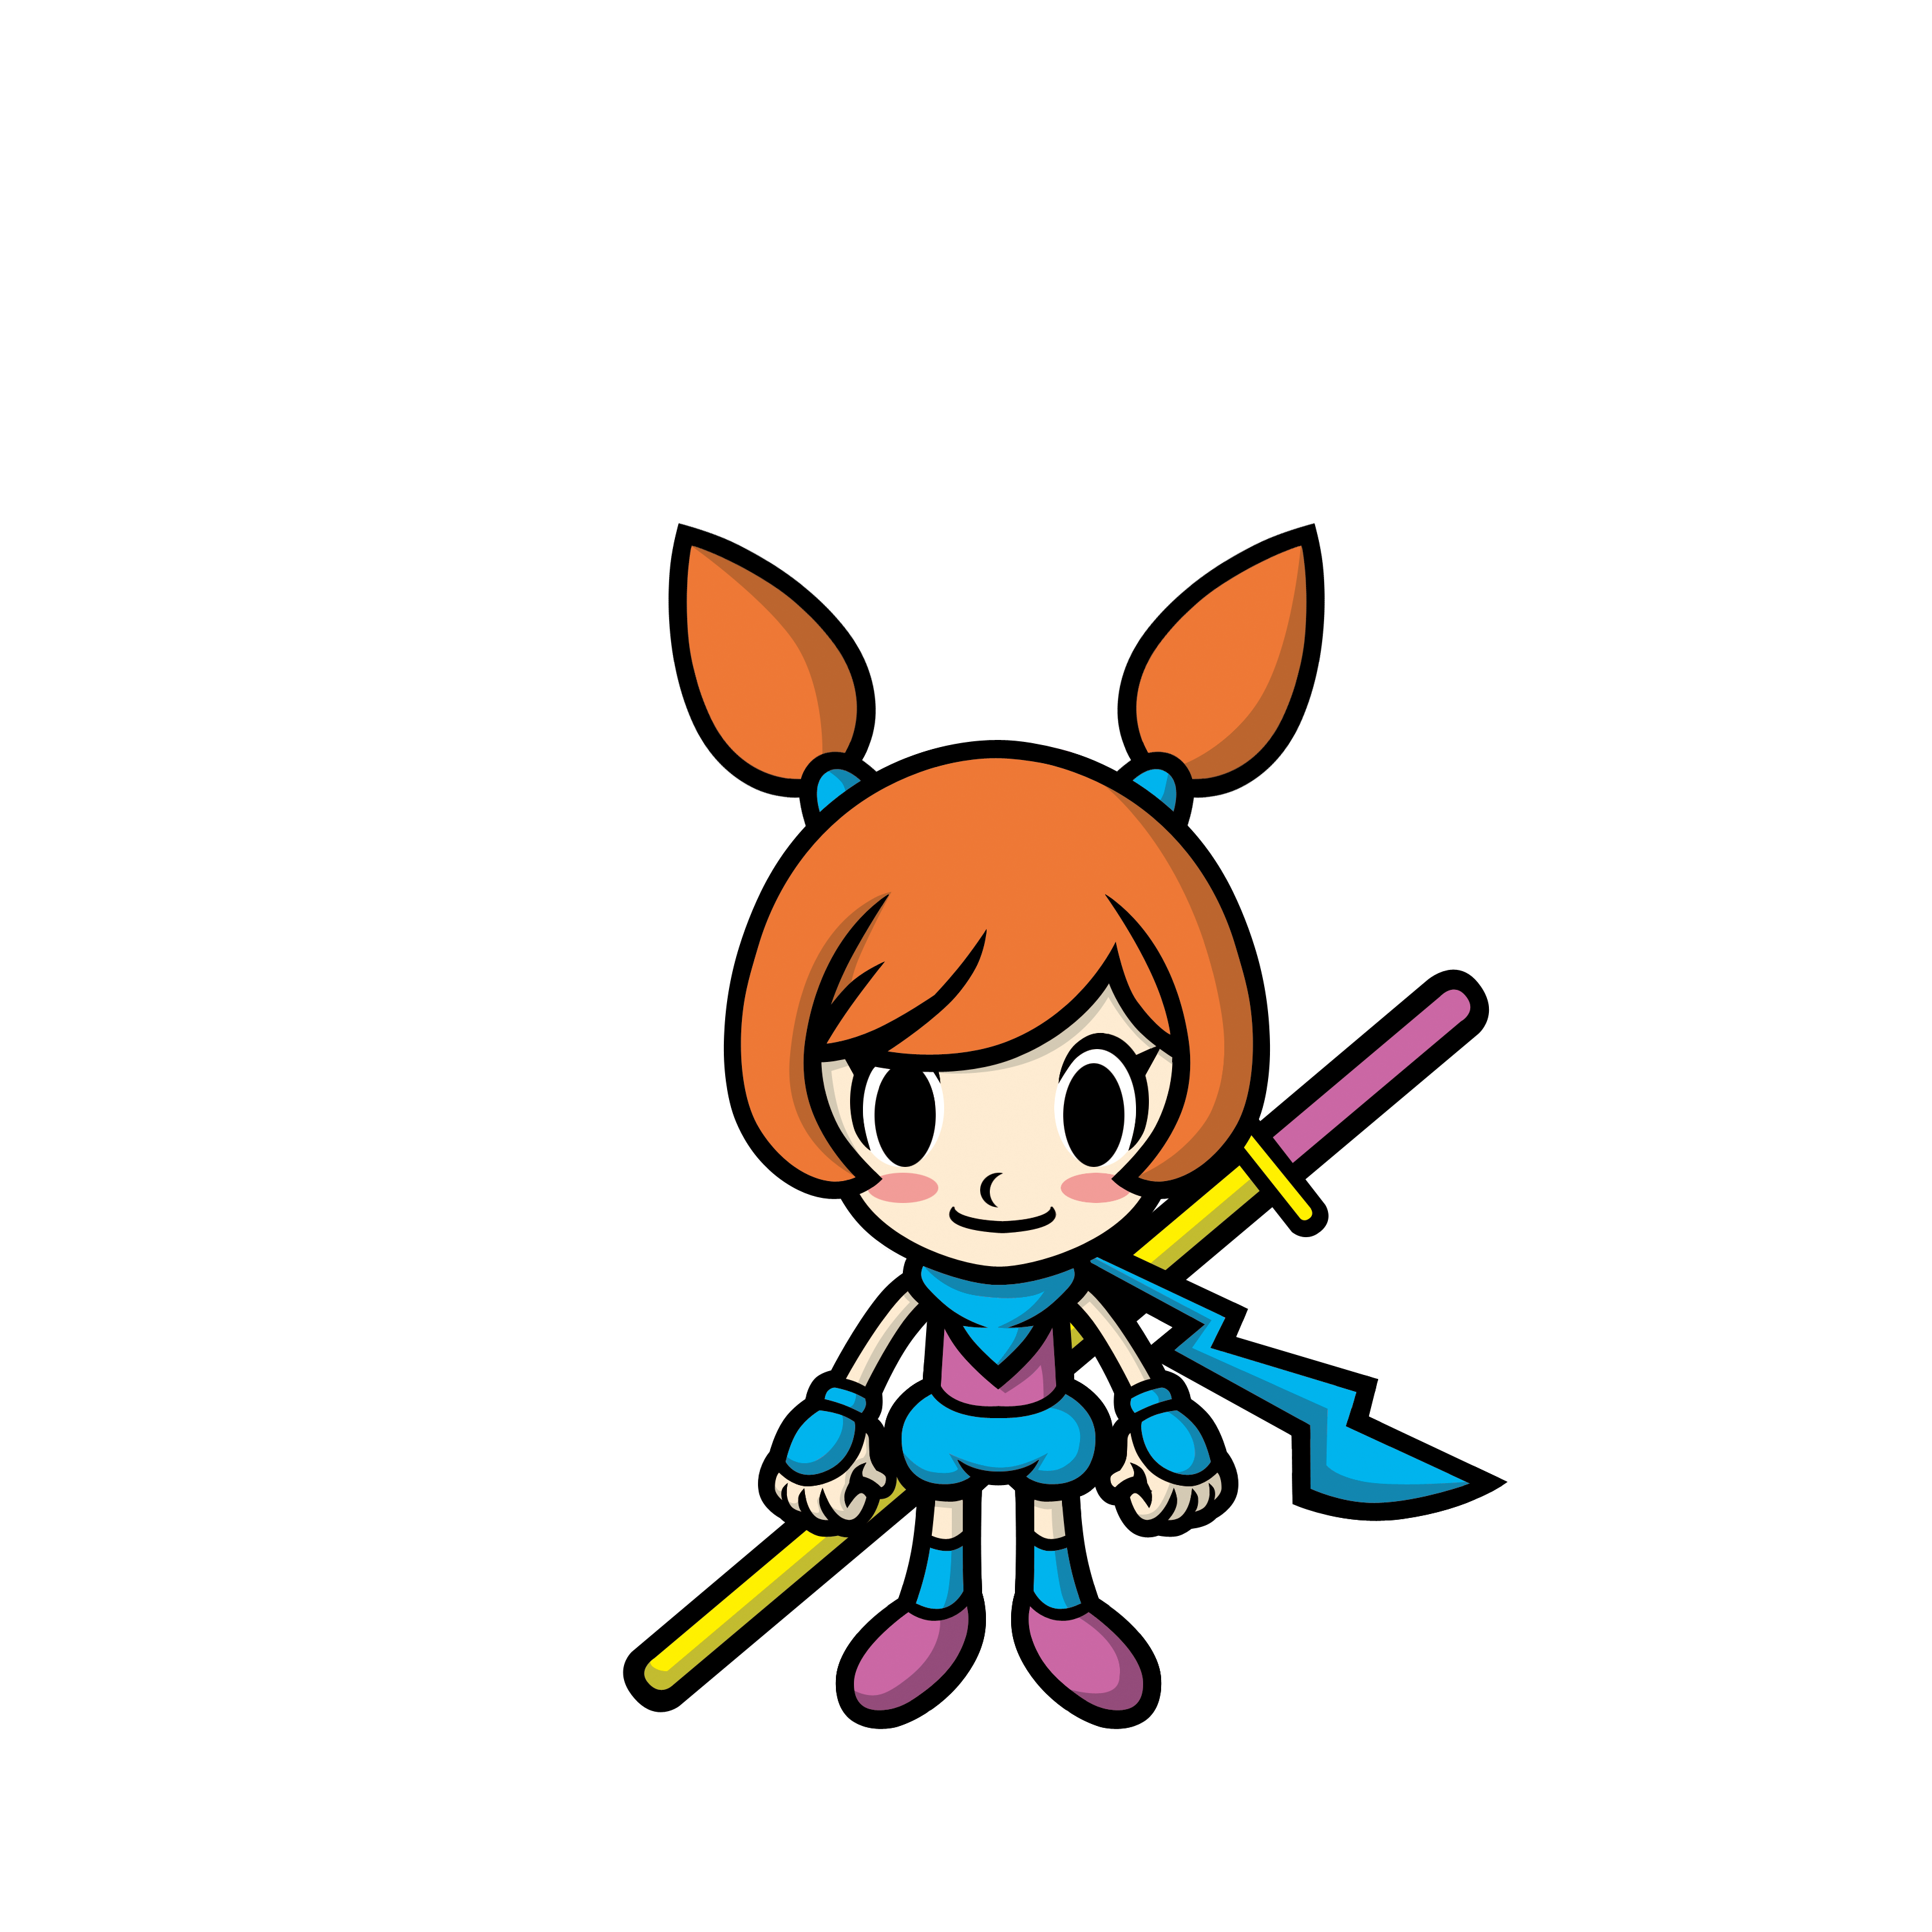 Game & Wario (Wii U) Character & Logo Artwork